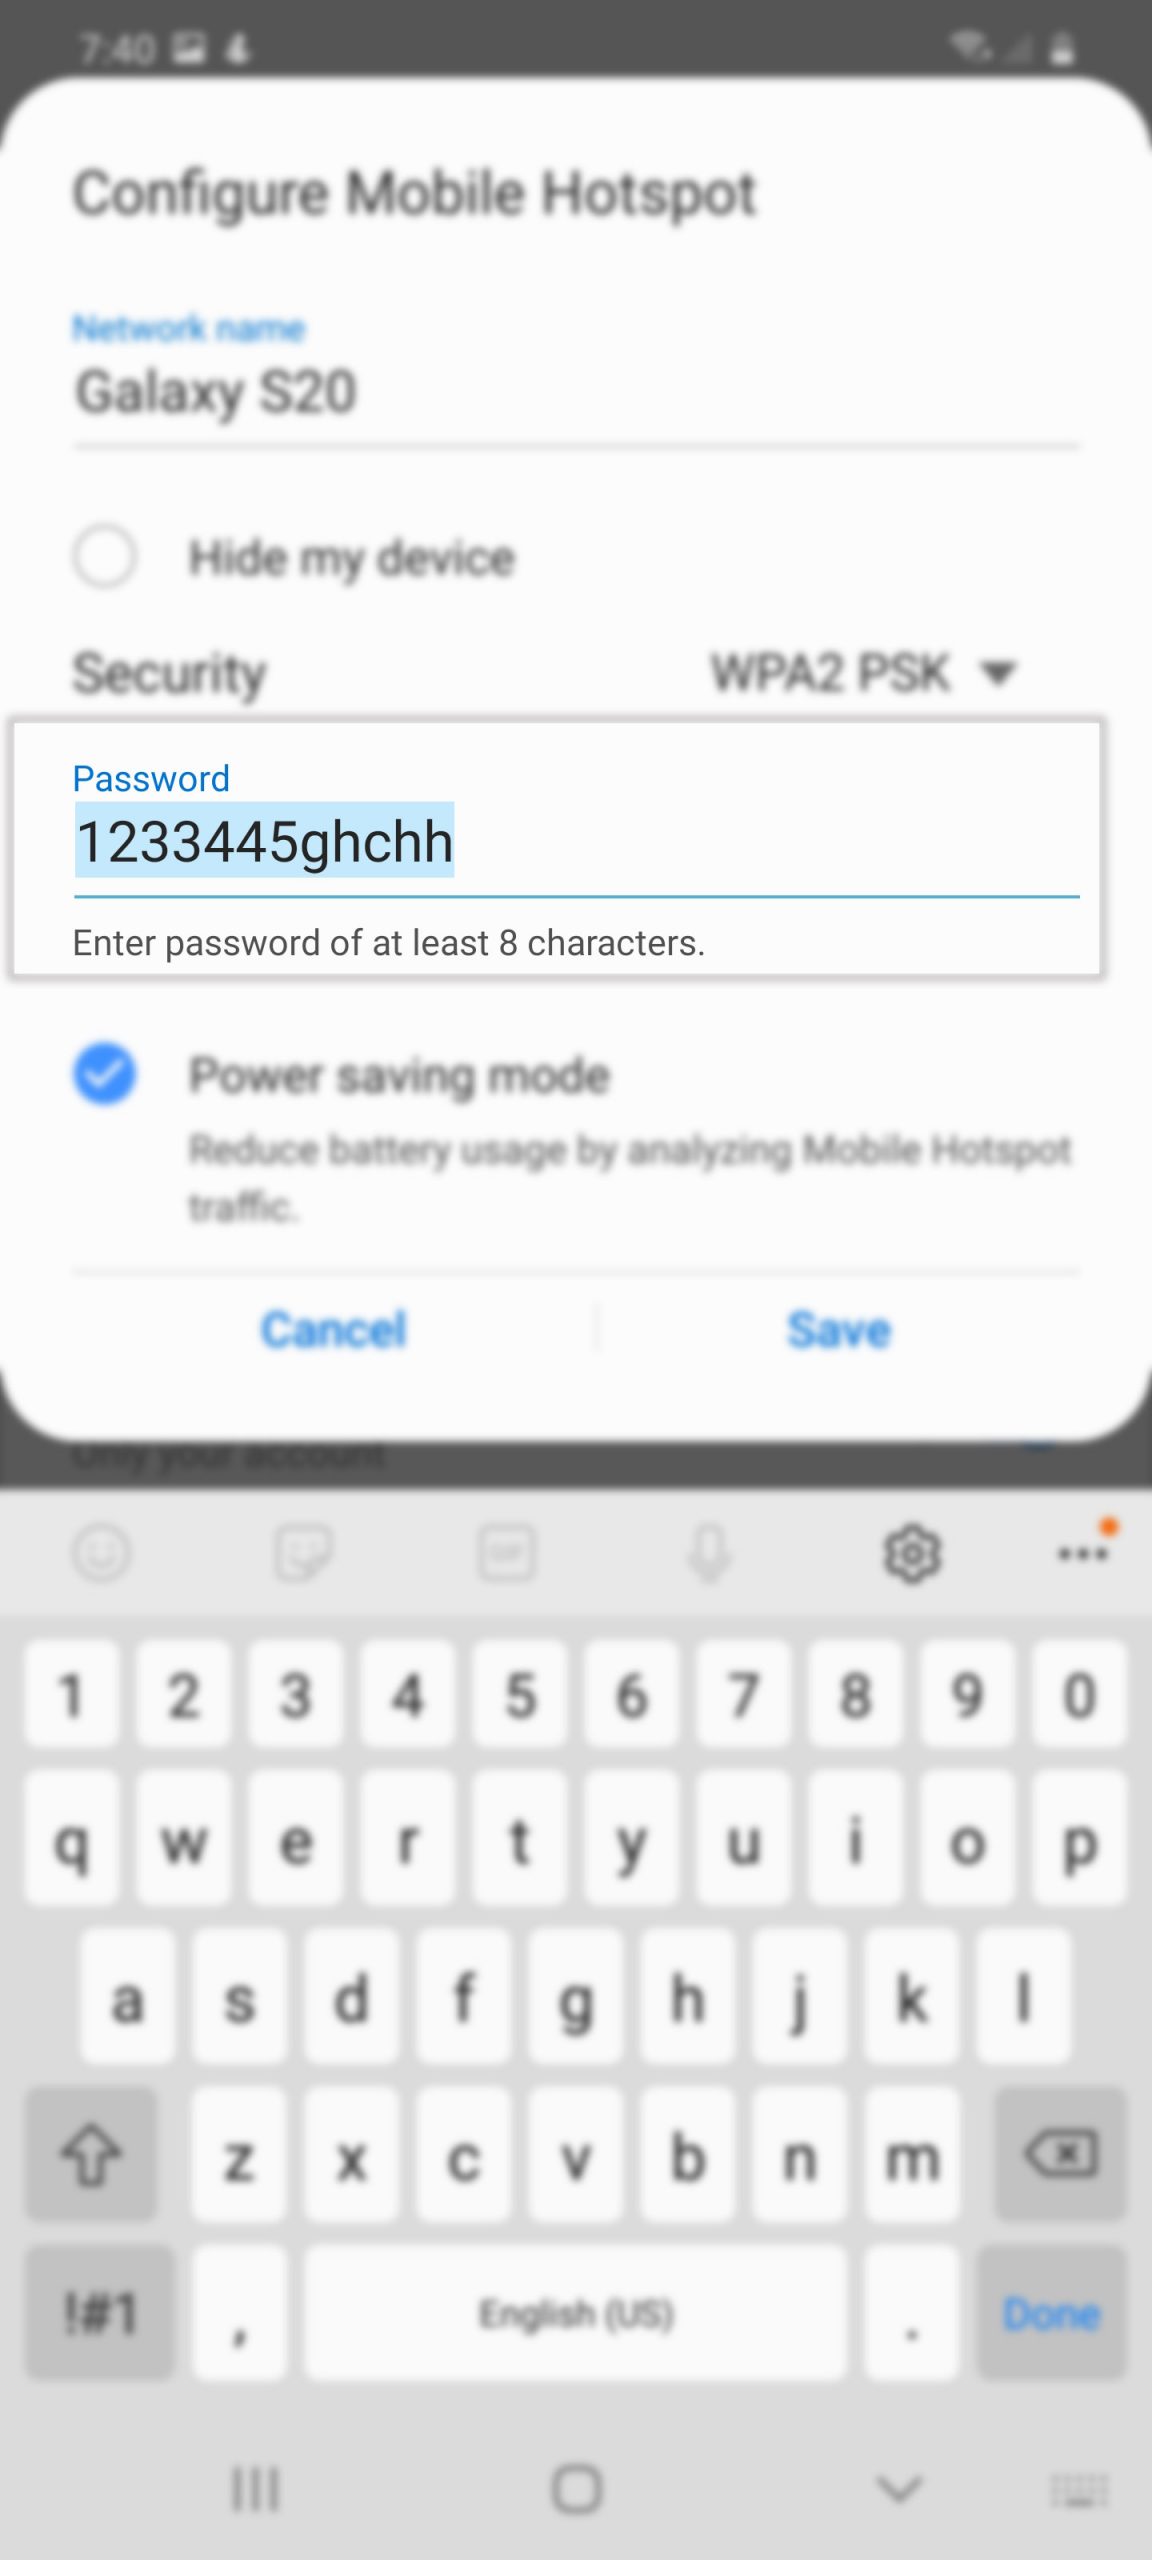 set up mobile hotspot on galaxy s20 - enter password